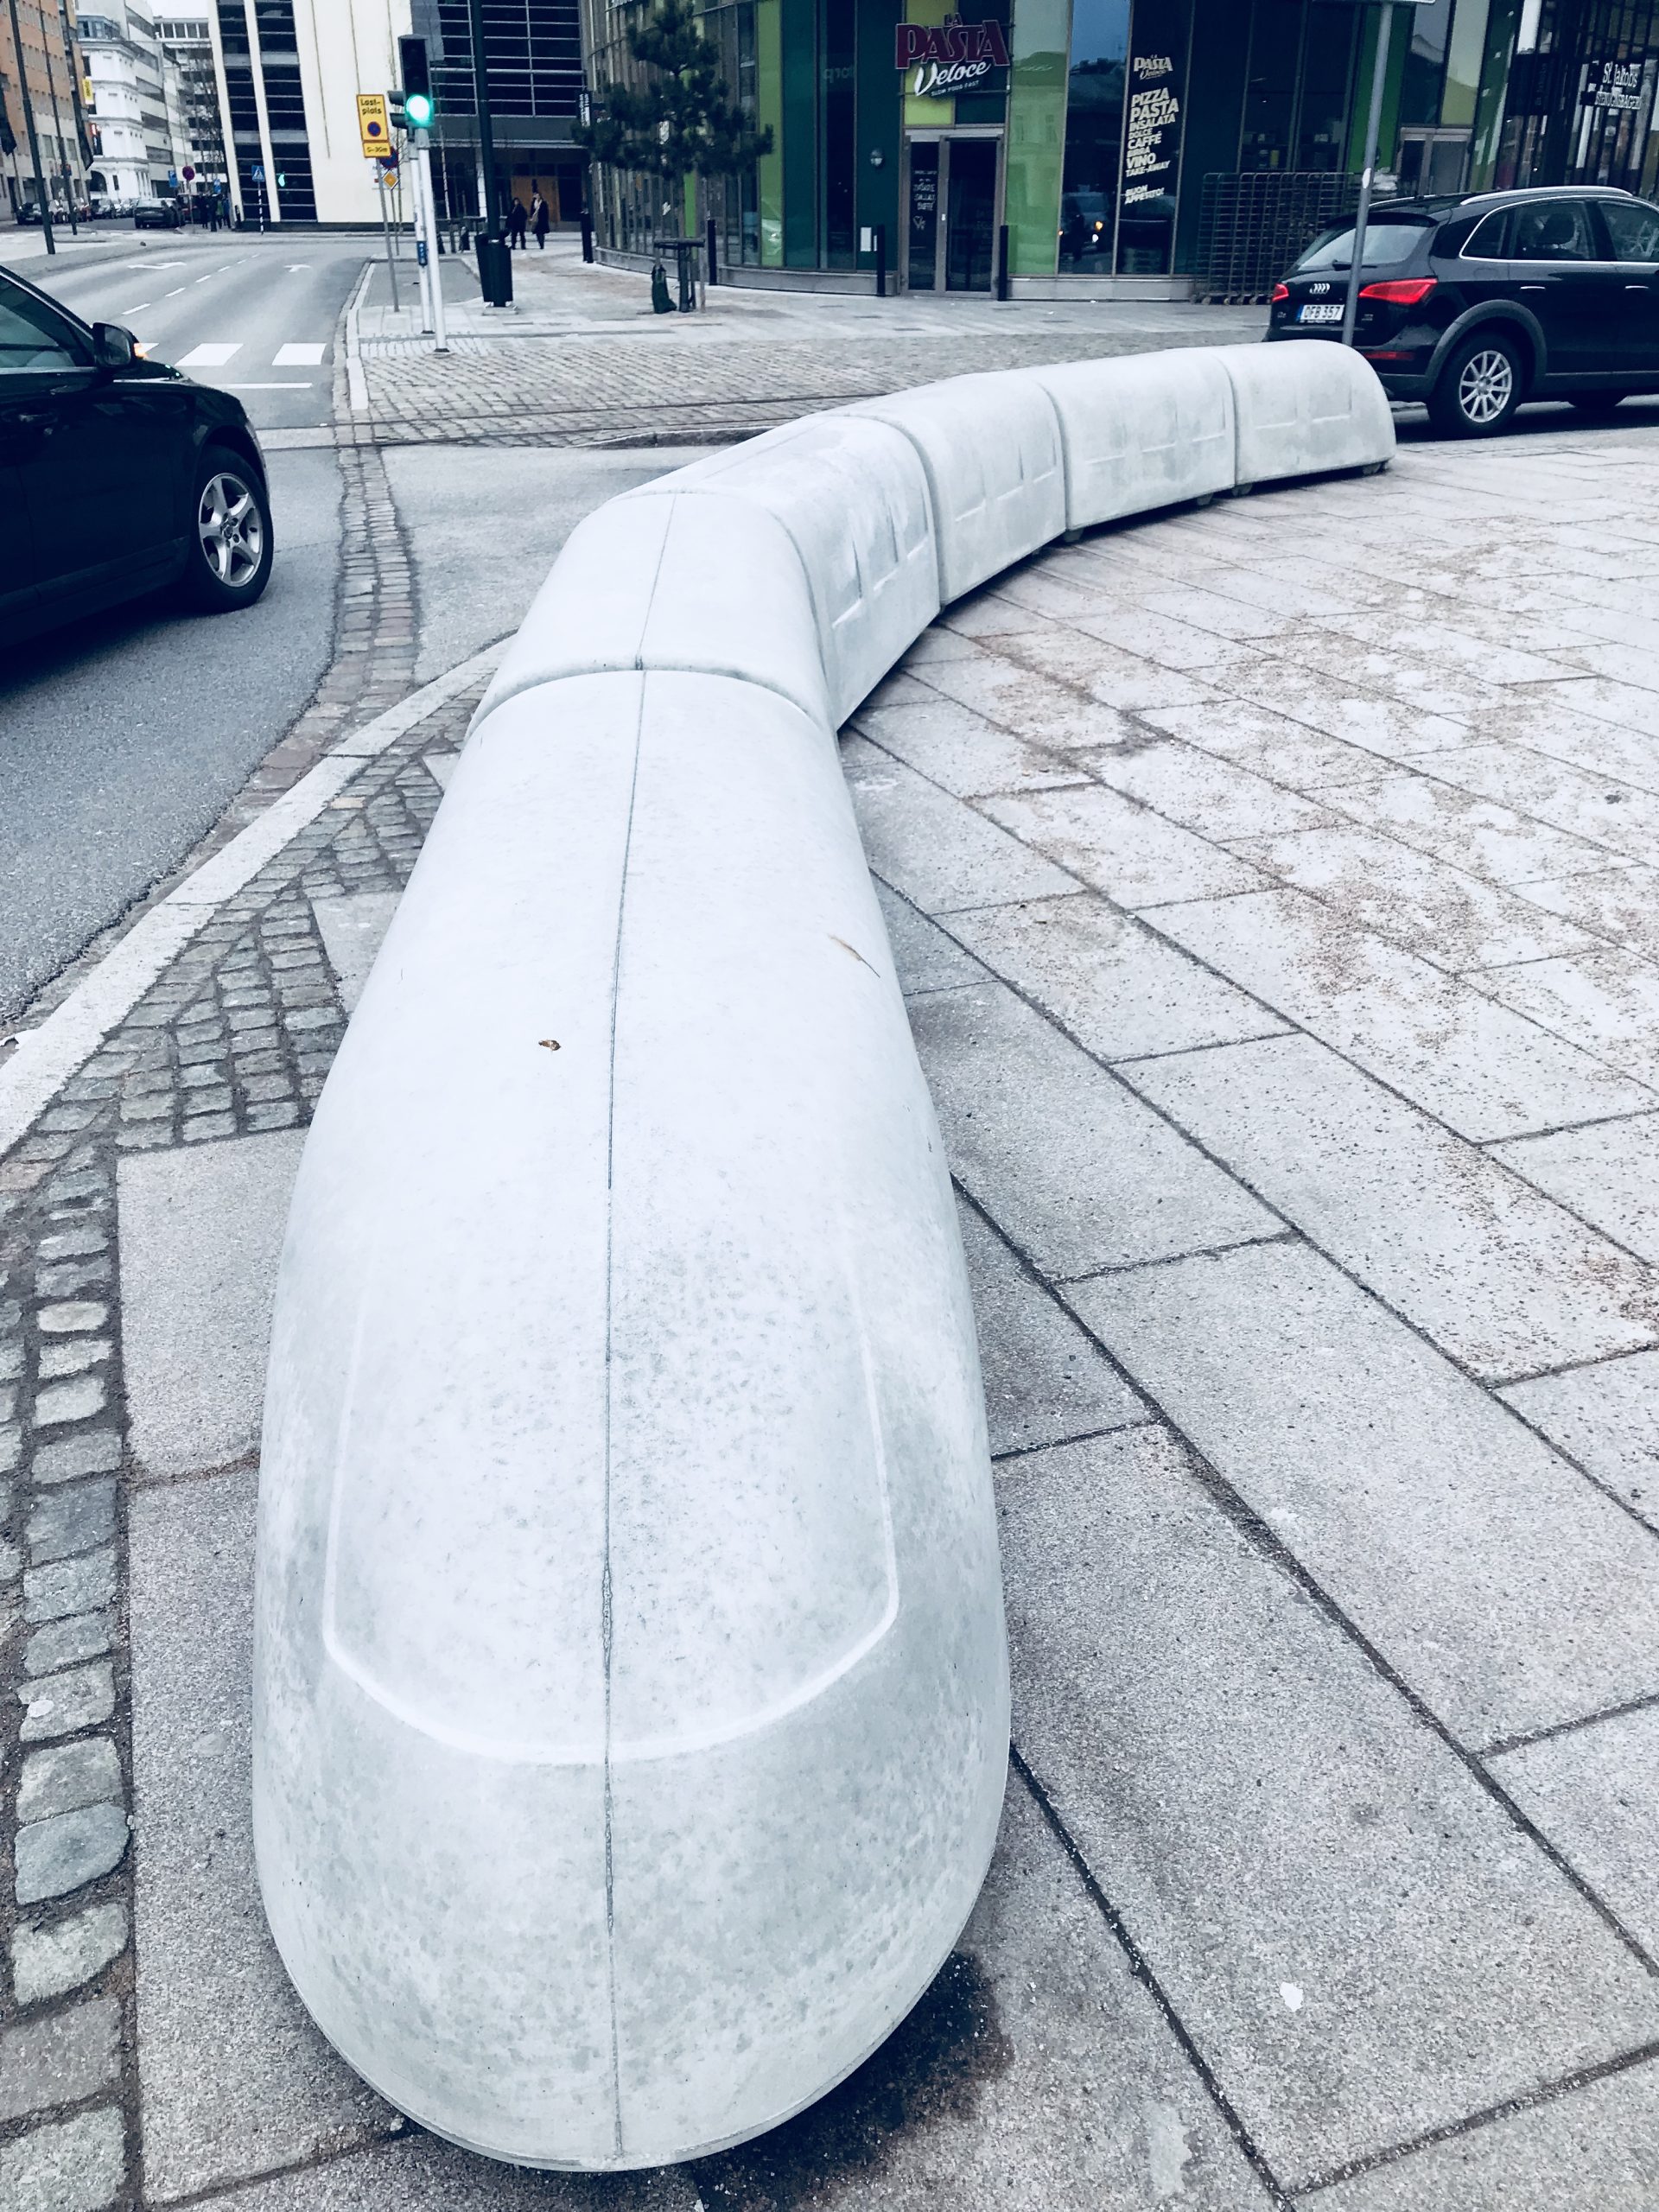 Pedestrian Protection - designed by Lundbergdesign